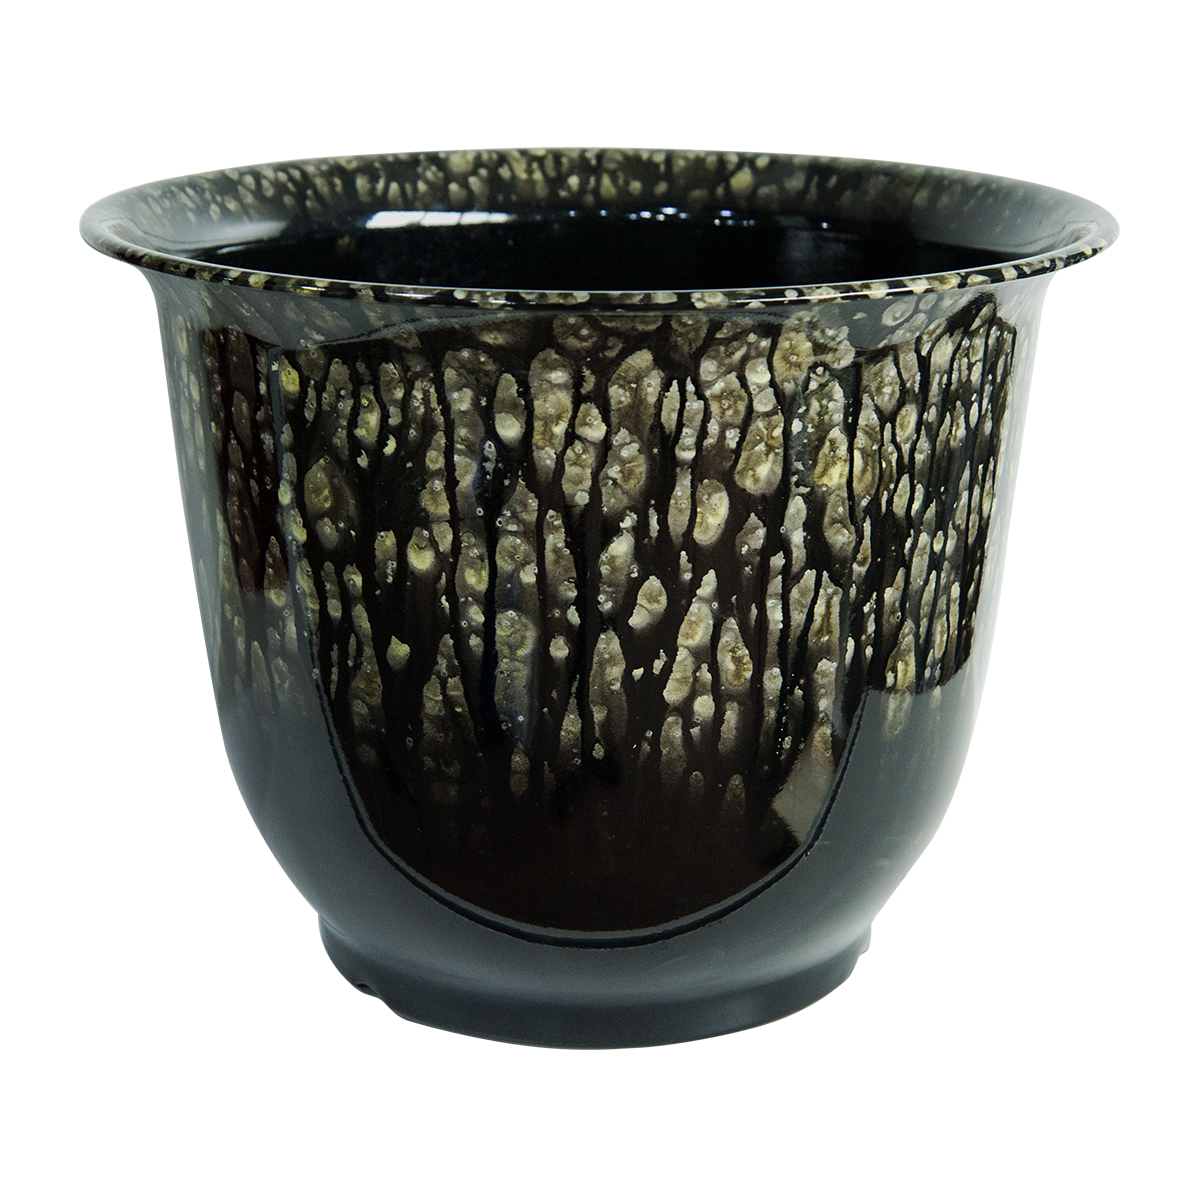 Resin Ceramic Glazed Finish Bell Pot Planters